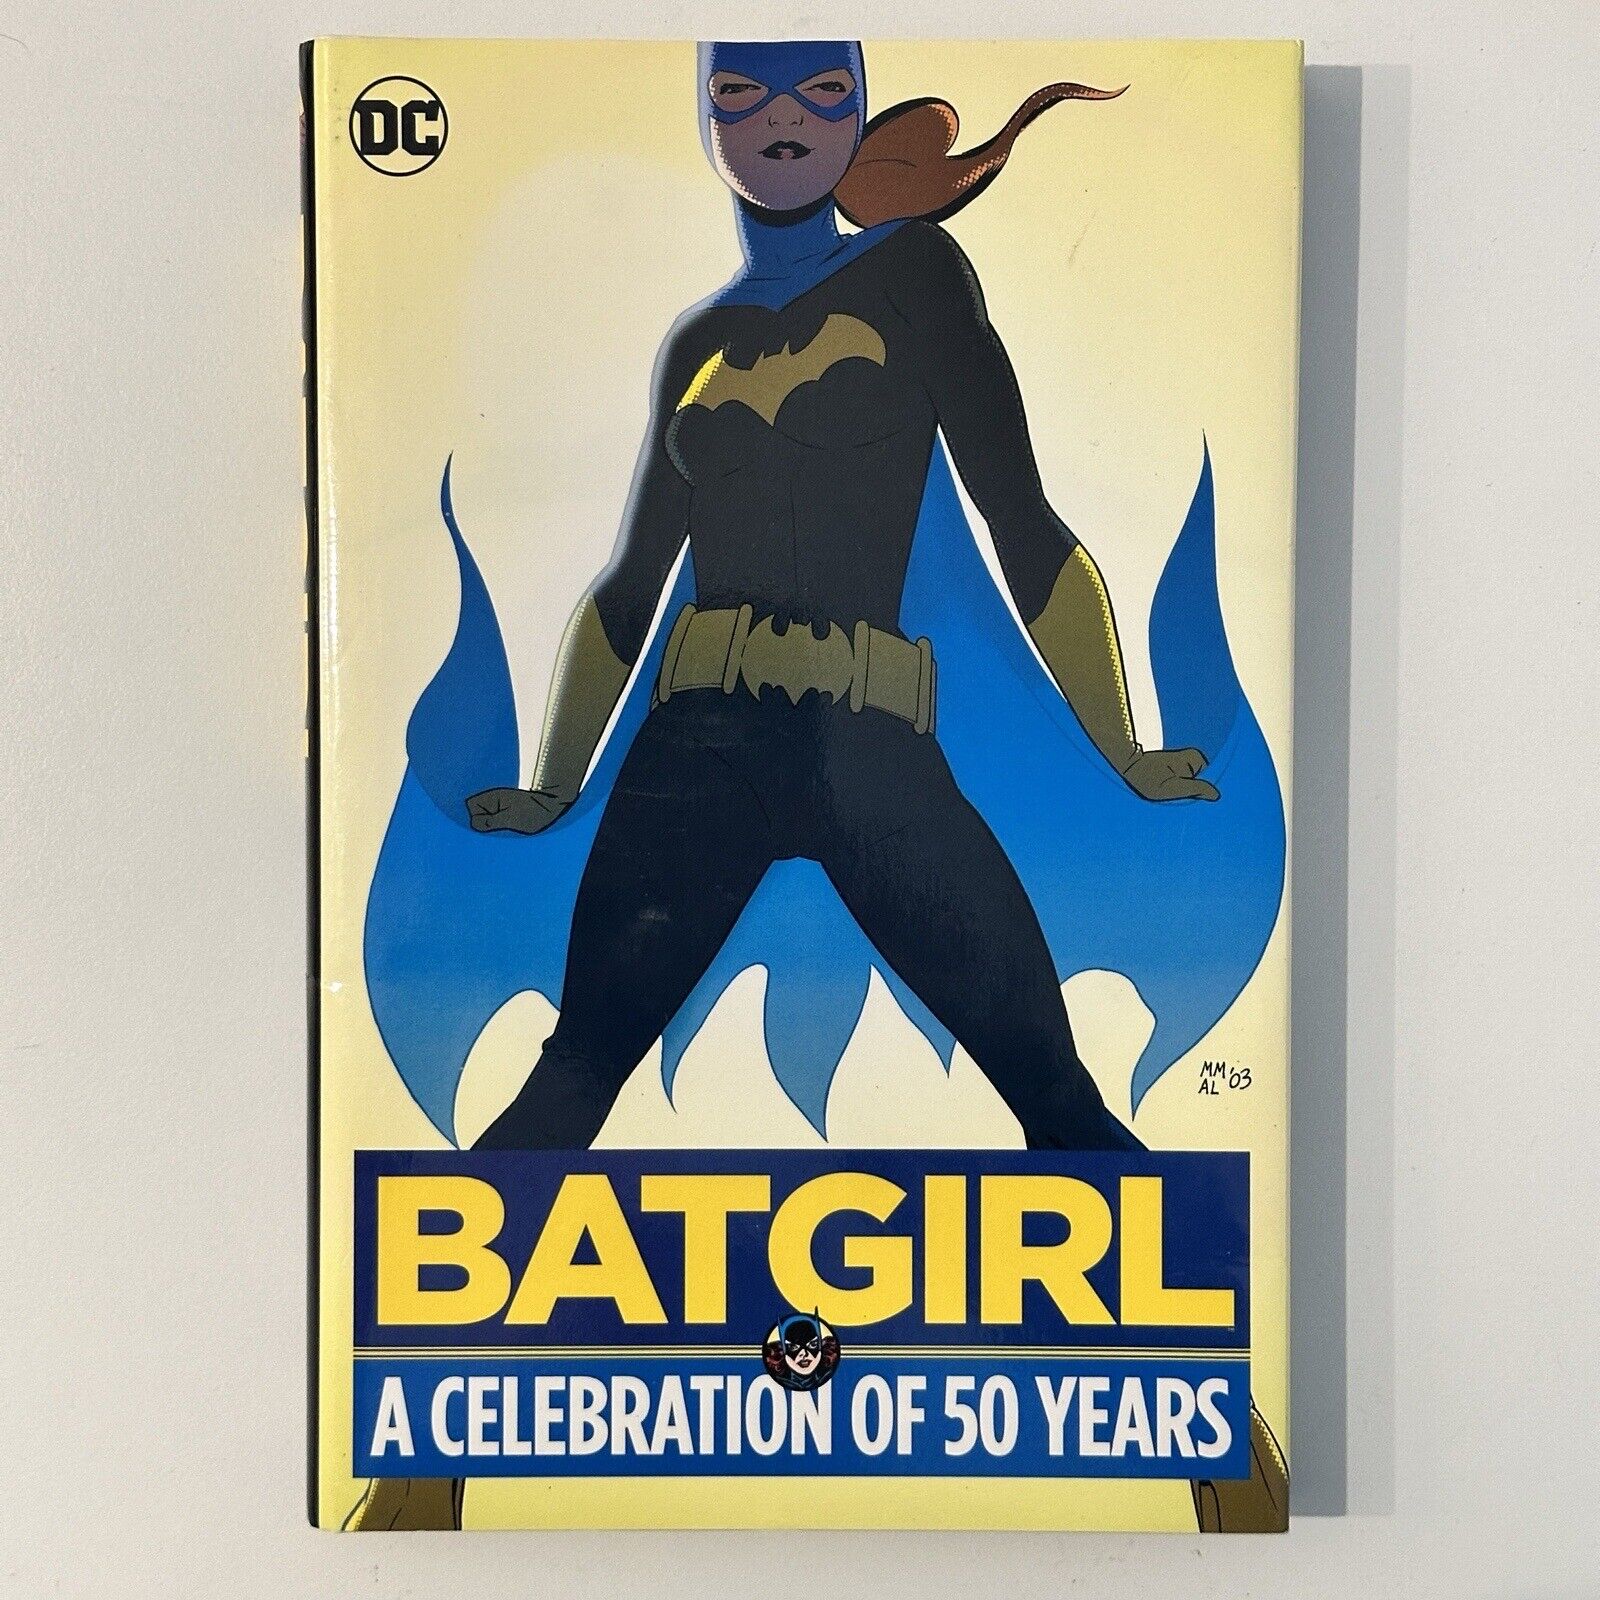 BATGIRL : A CELEBRATION OF 50 YEARS HC, DC COMICS (2017) UNREAD SEE PHOTOS